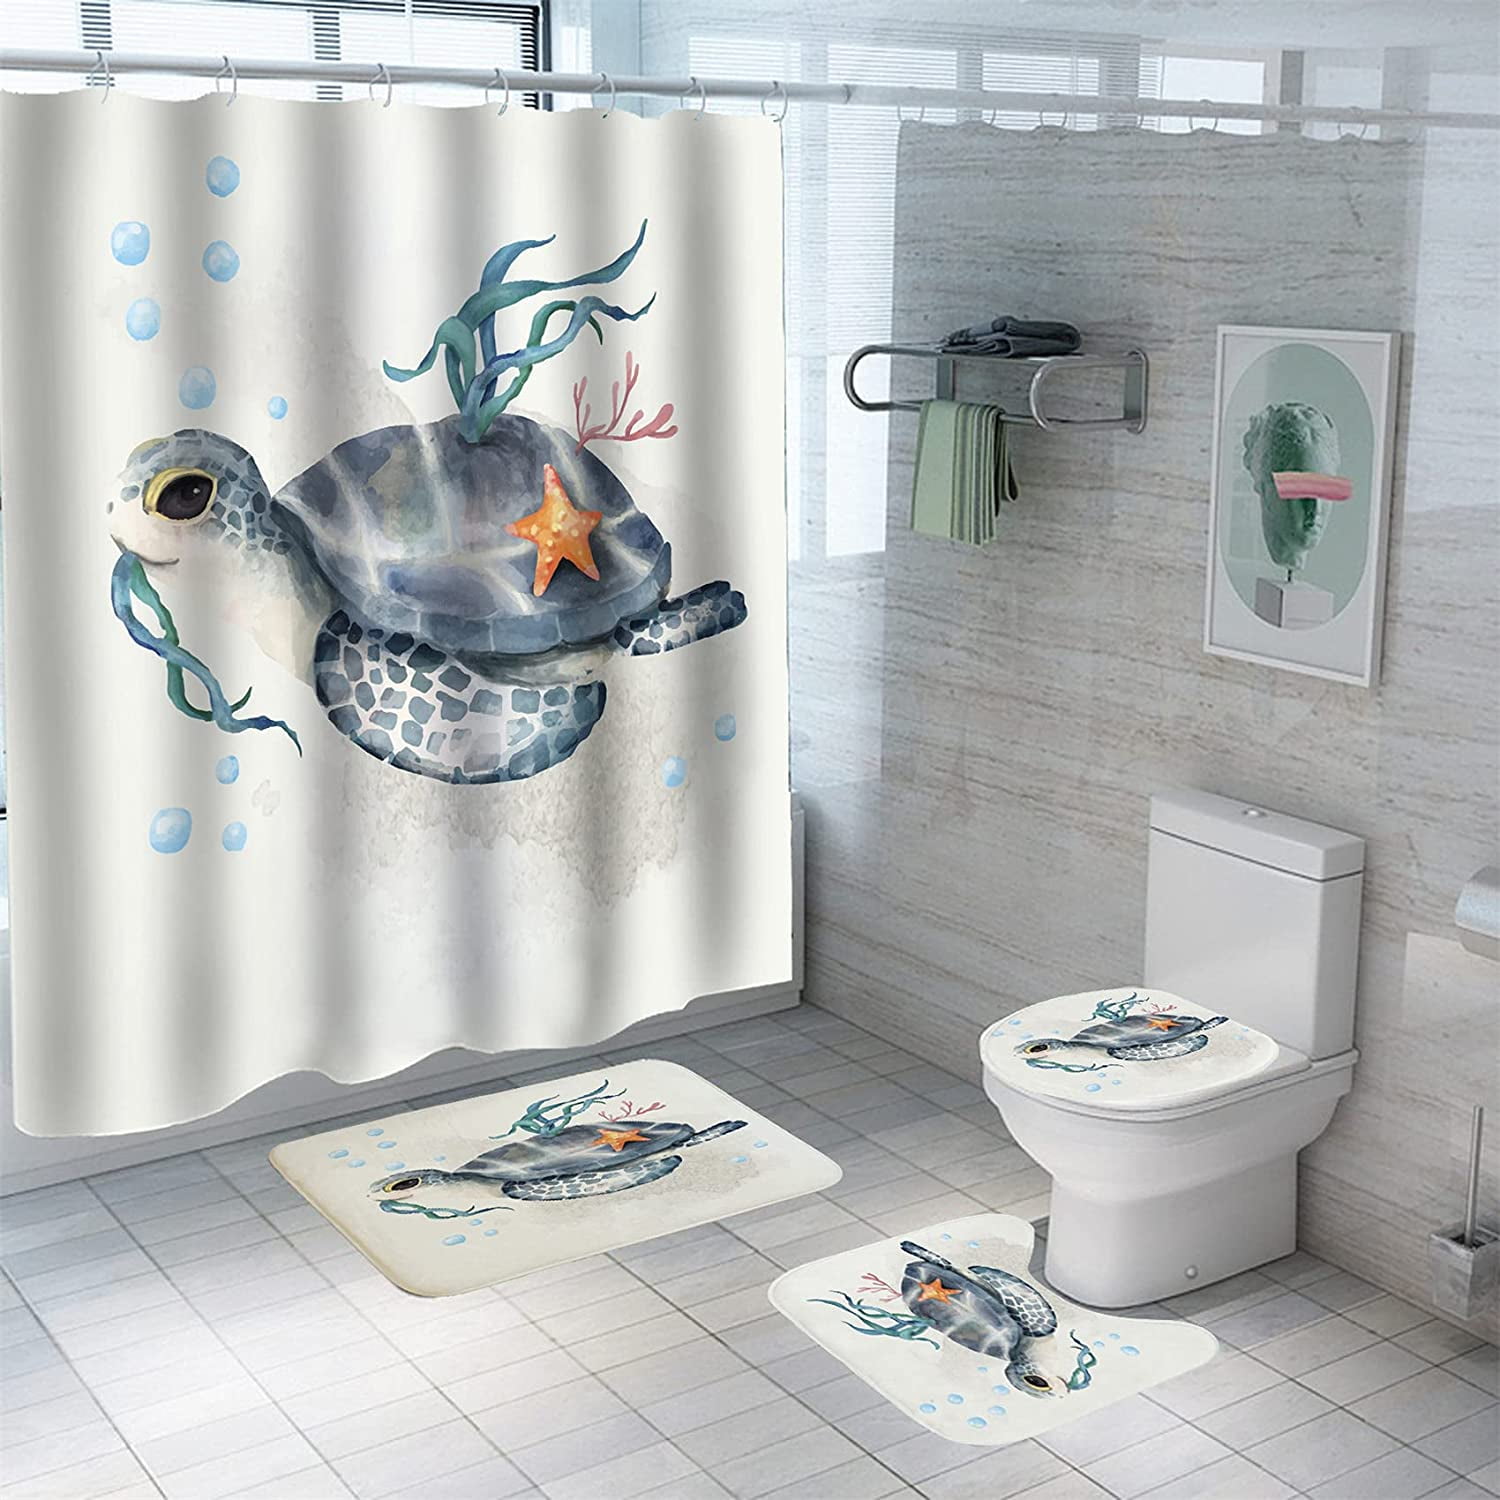 4PC/Set Anti-Slip Bathroom Pedestal Rug+Lid Toilet Cover+Bath Mat+Shower Curtain 